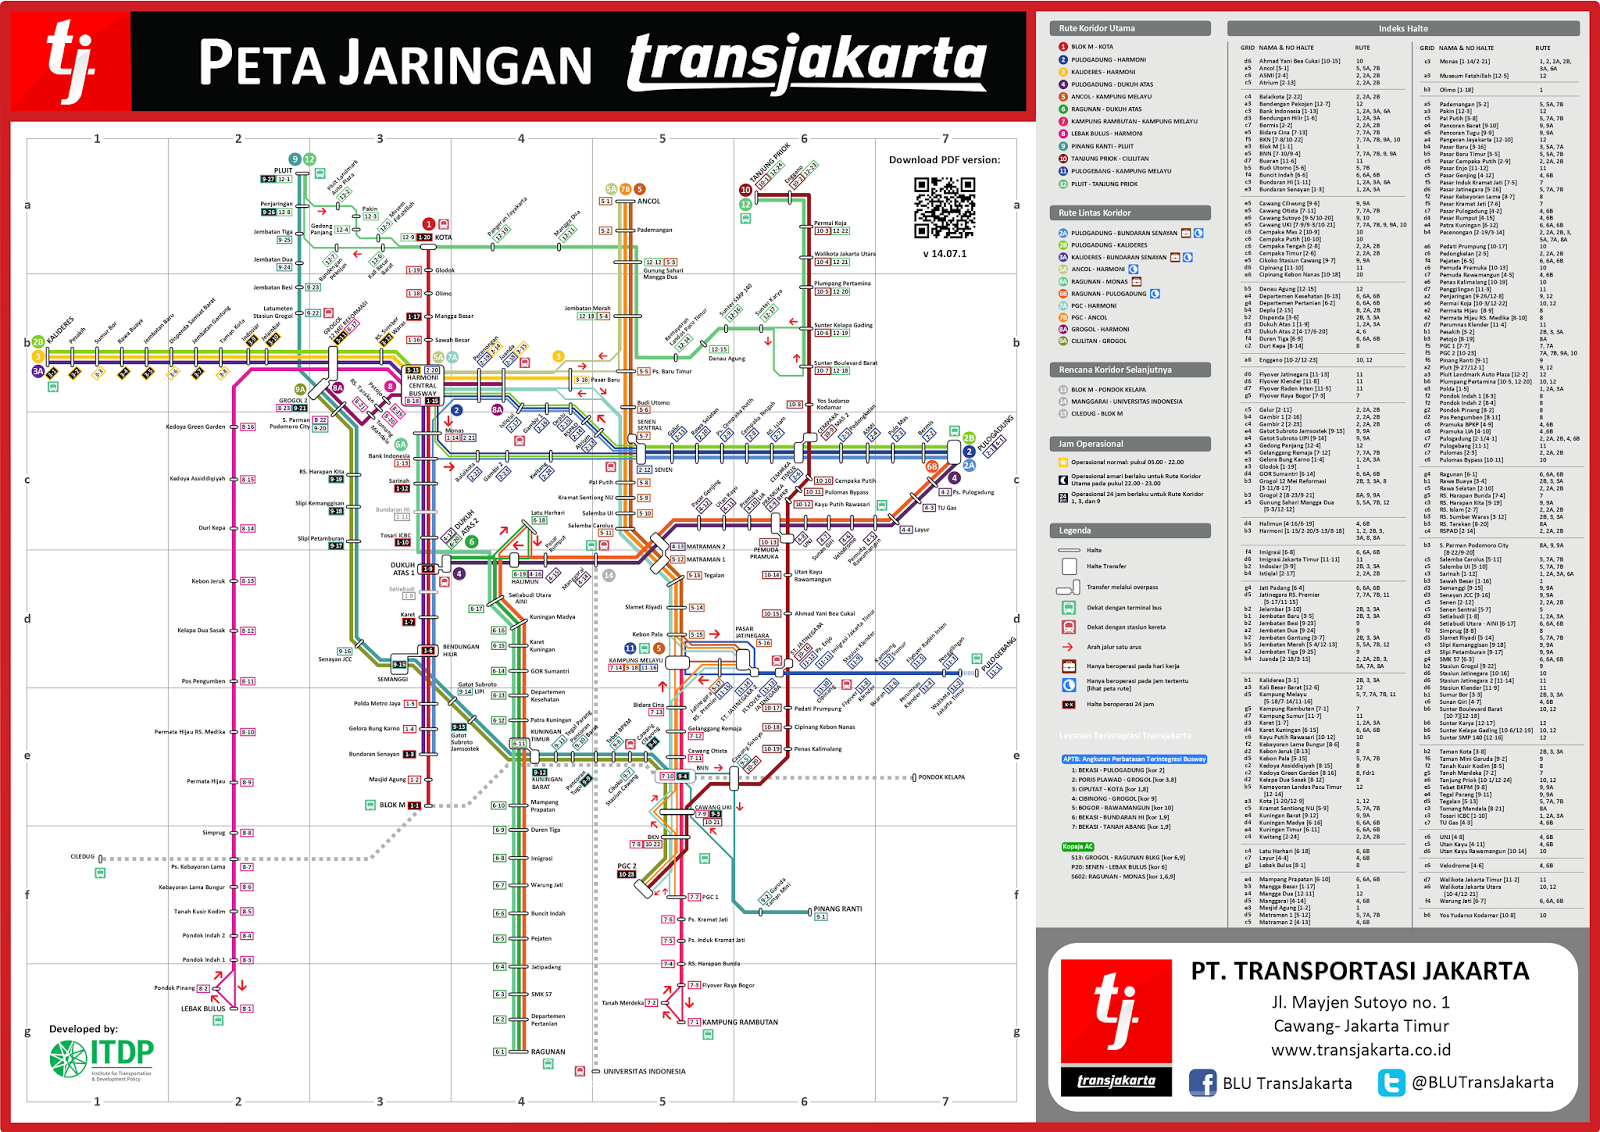 TanAsterP Transportation around Jakarta Today